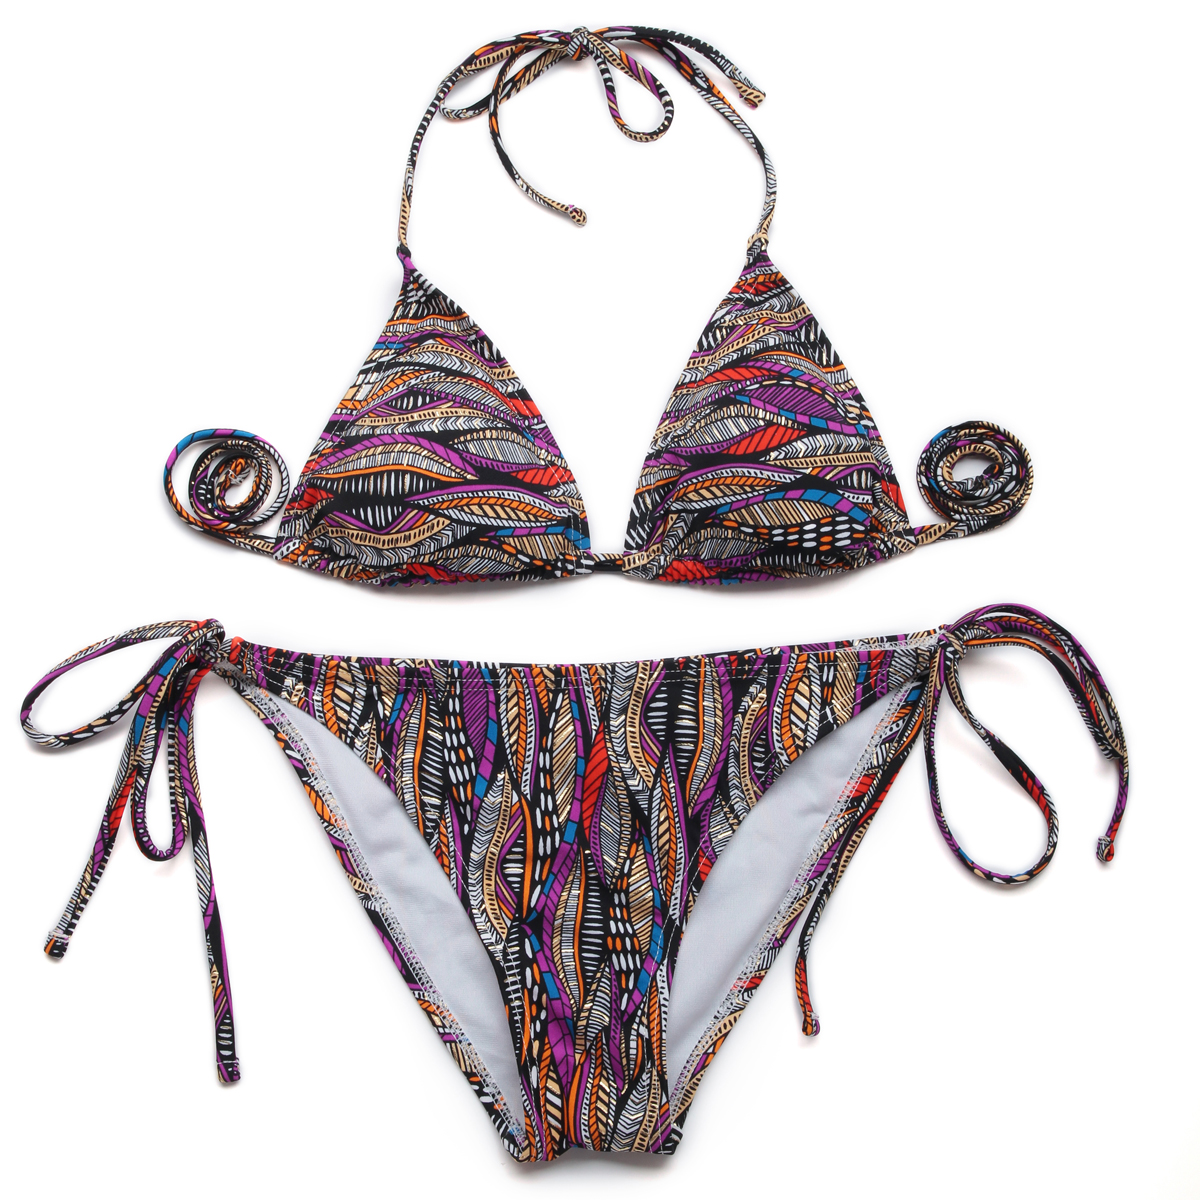 Summer Sexy Swimsuit Ethnic Triangle Top With Classic Cut Bottom Bikini Swimwear Suit Bikini Set 2015